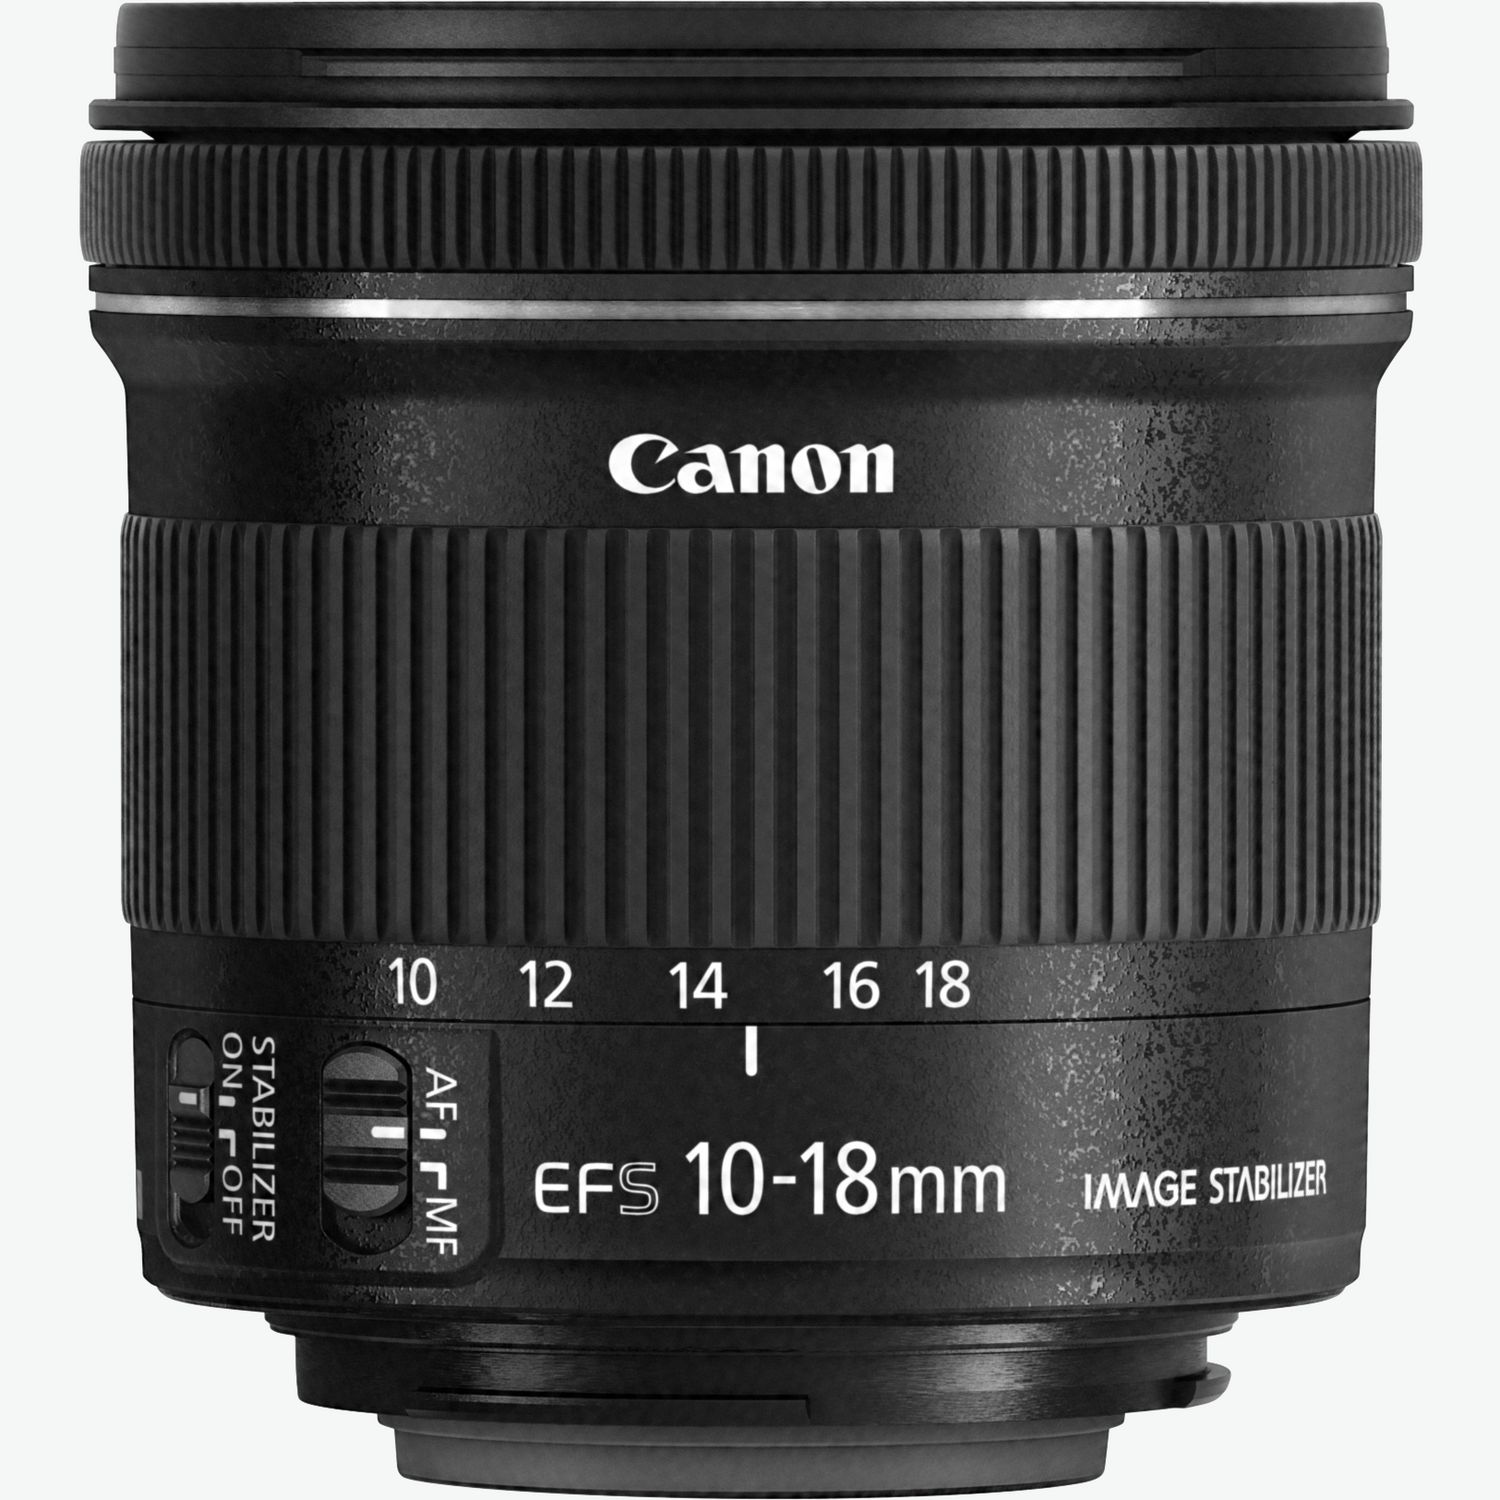 Buy Canon EOS 4000D Schwarz + EF-S 18-55mm III Objektiv + Tasche + SD-Karte  in WLAN-Kameras — Canon Schweiz Shop